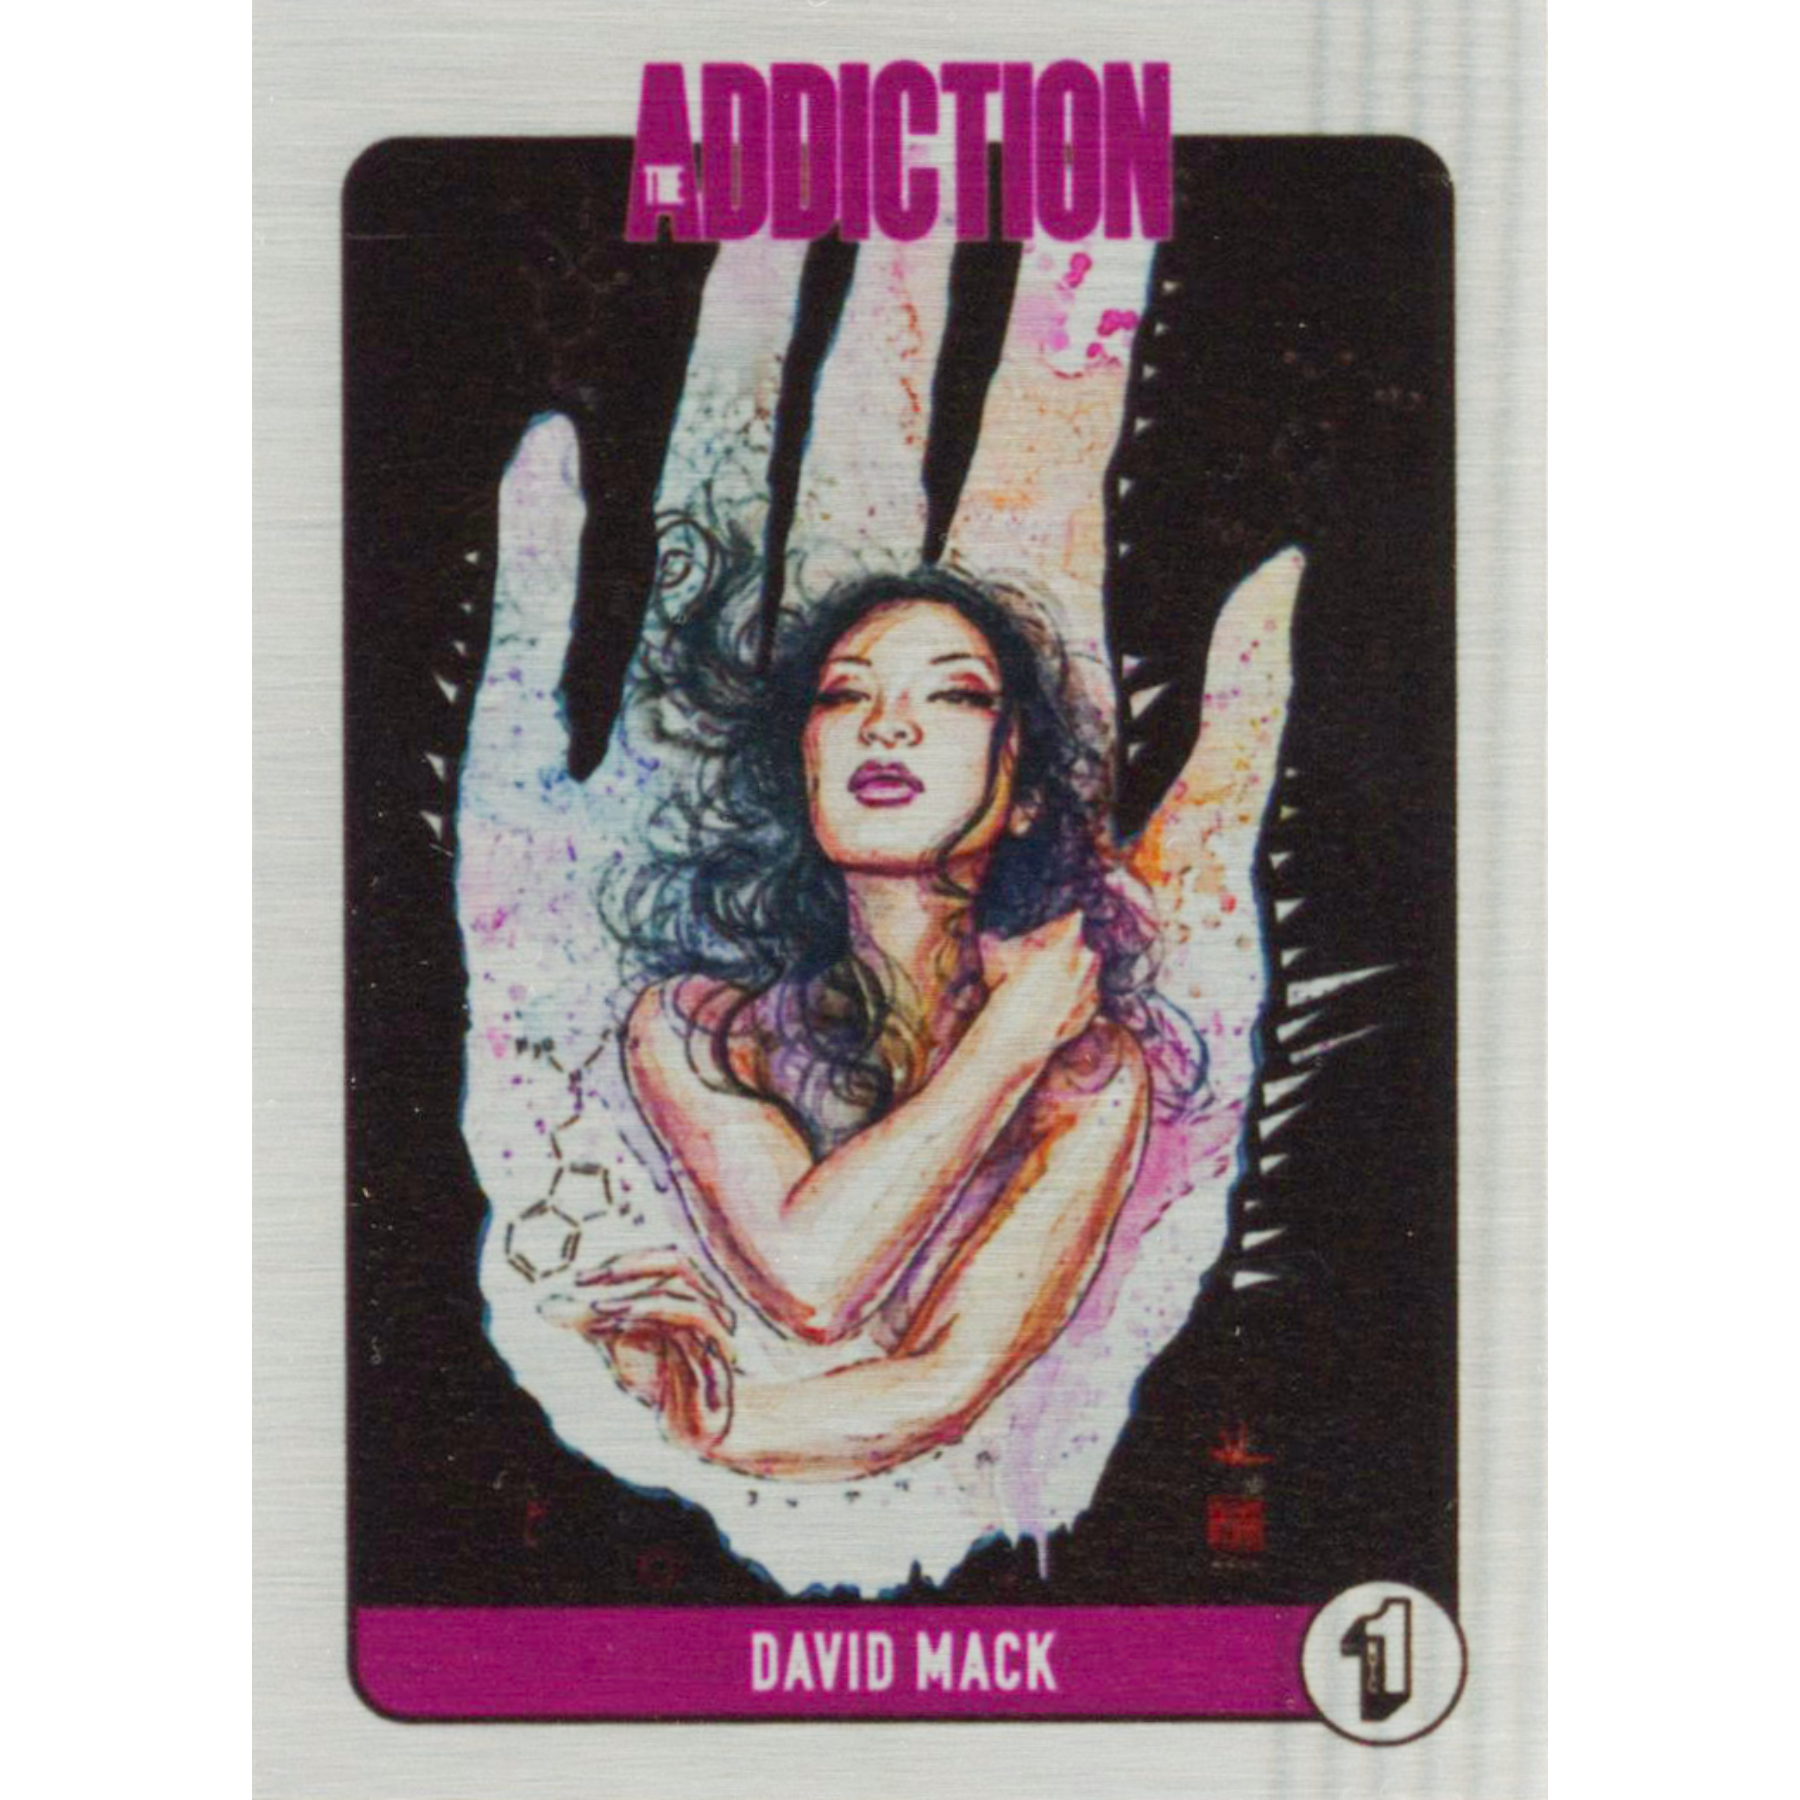 David Mack&#39;s The Addiction Metallic Card